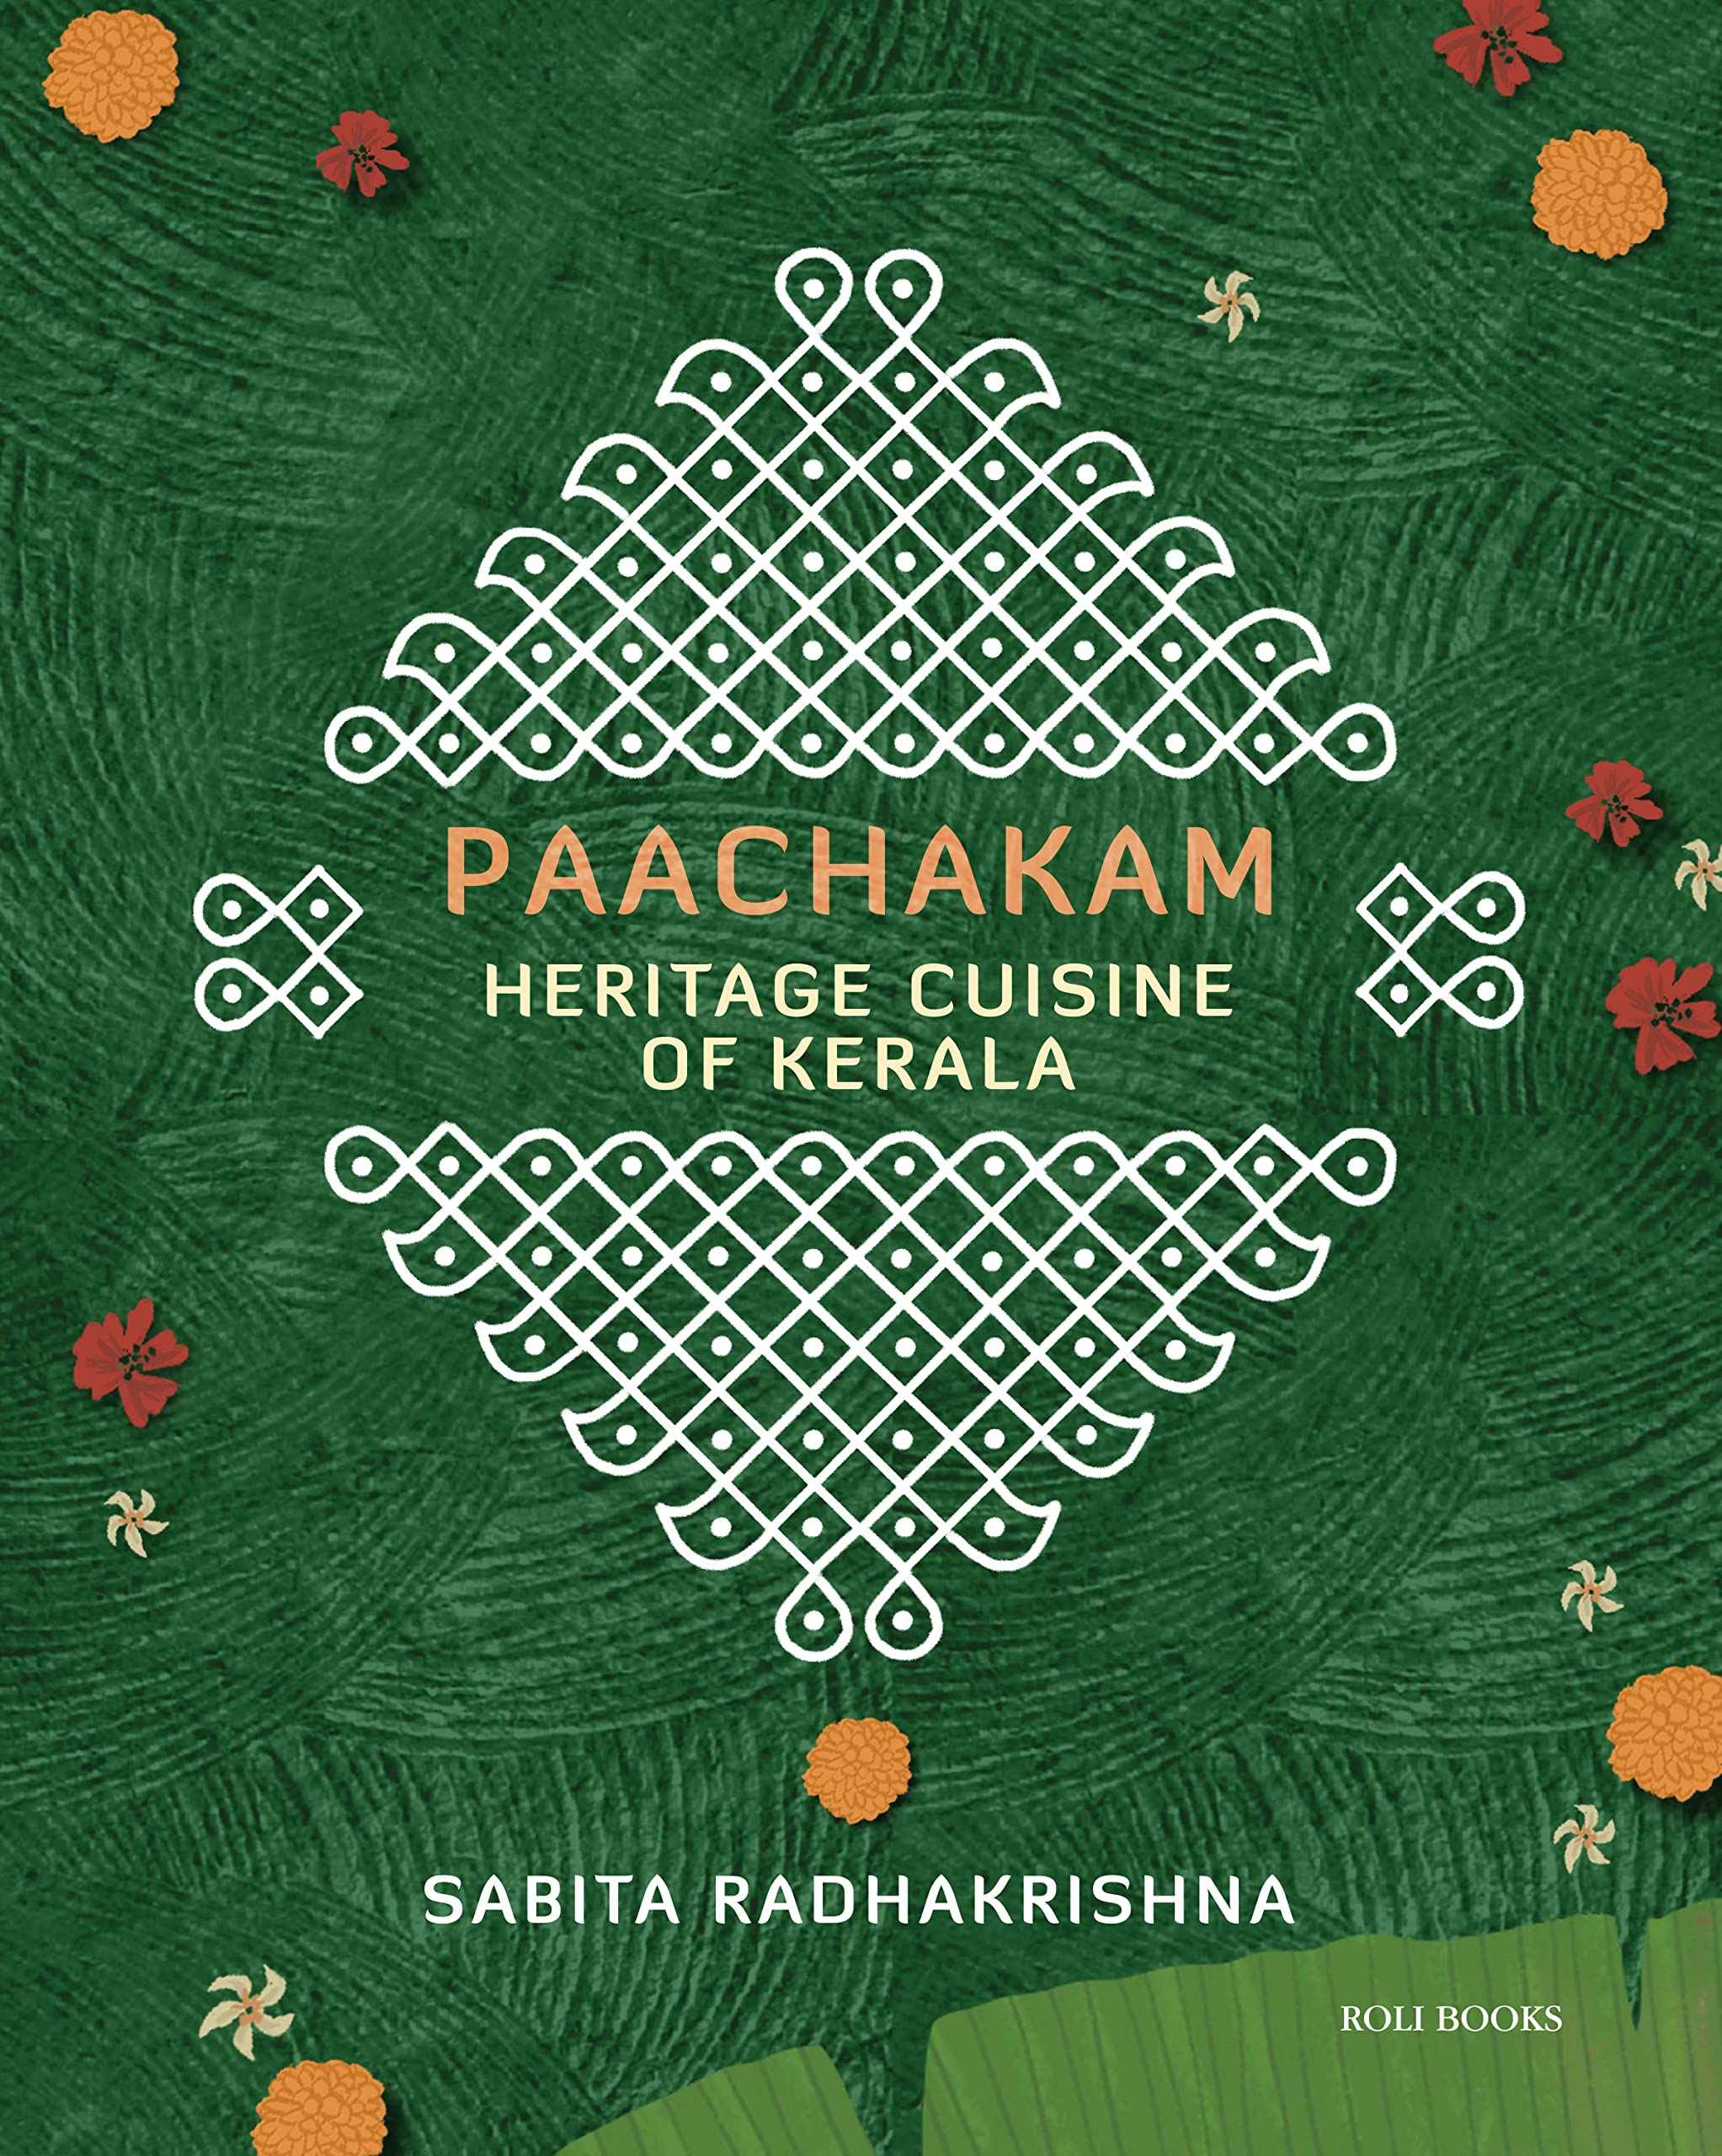 "Paachakam" by Sabita Radhakrishna: This cookbook offers authentic insights into Kerala’s most popular recipes